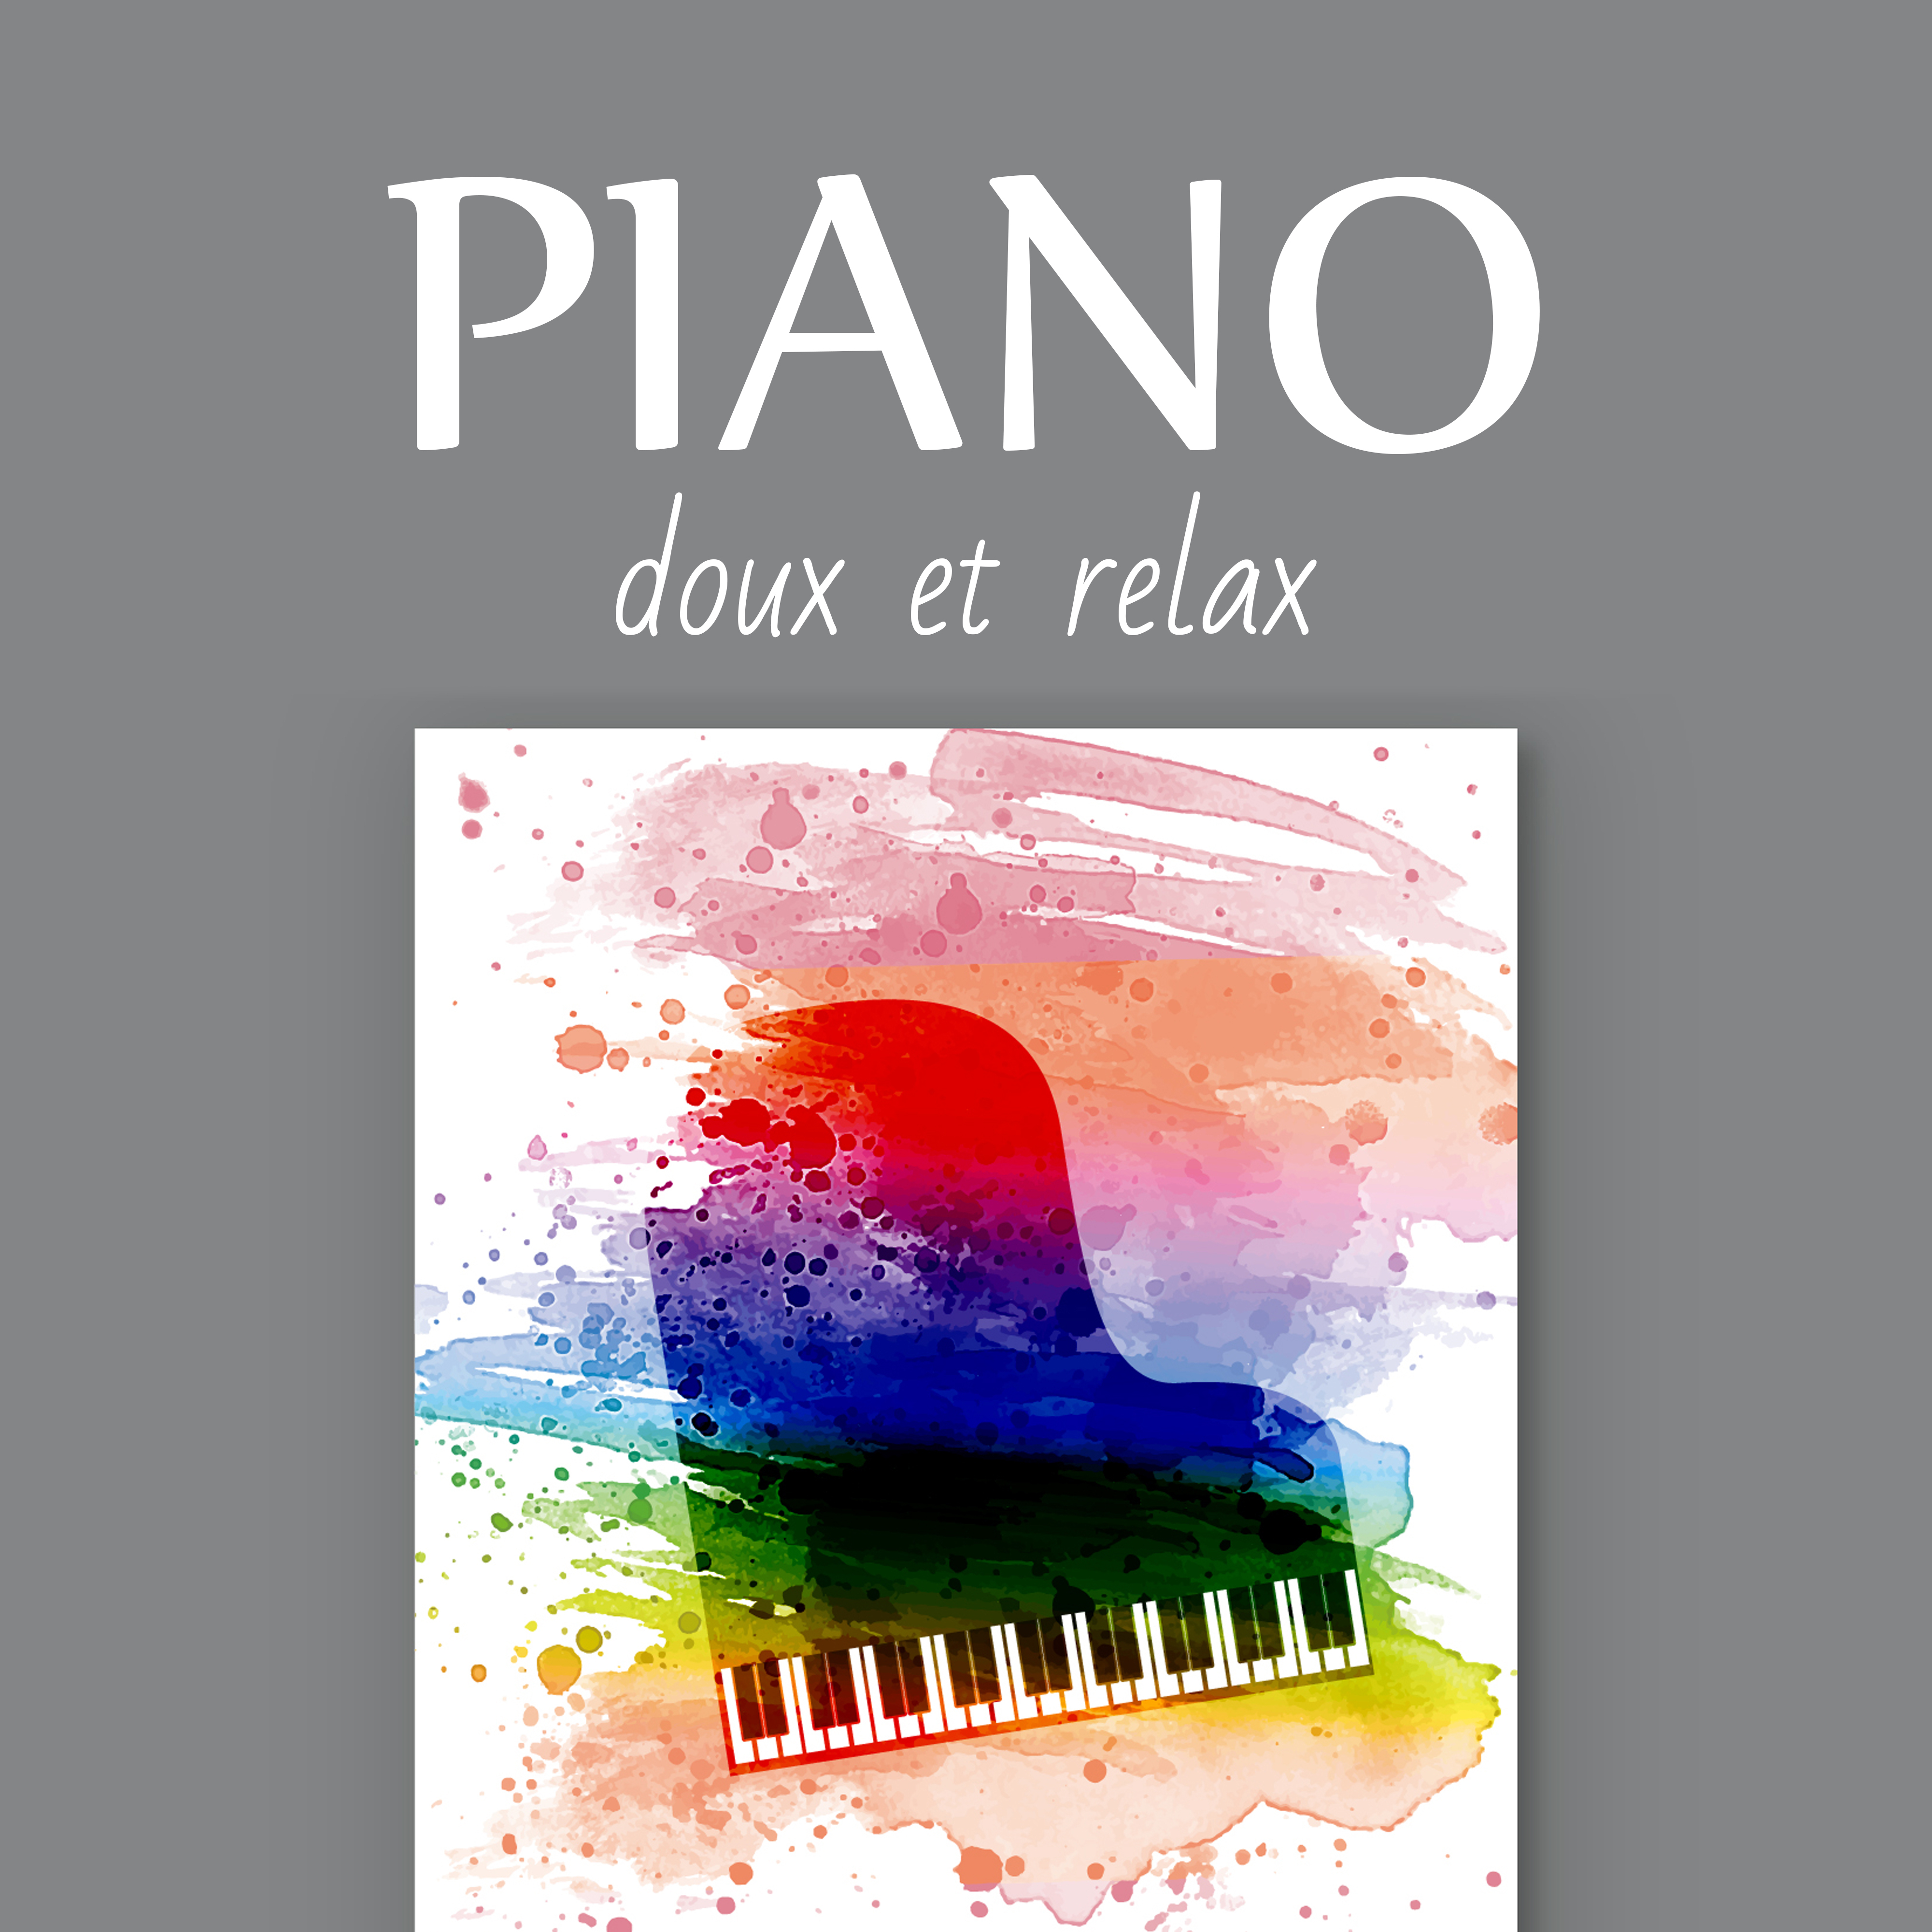 Piano doux et relax